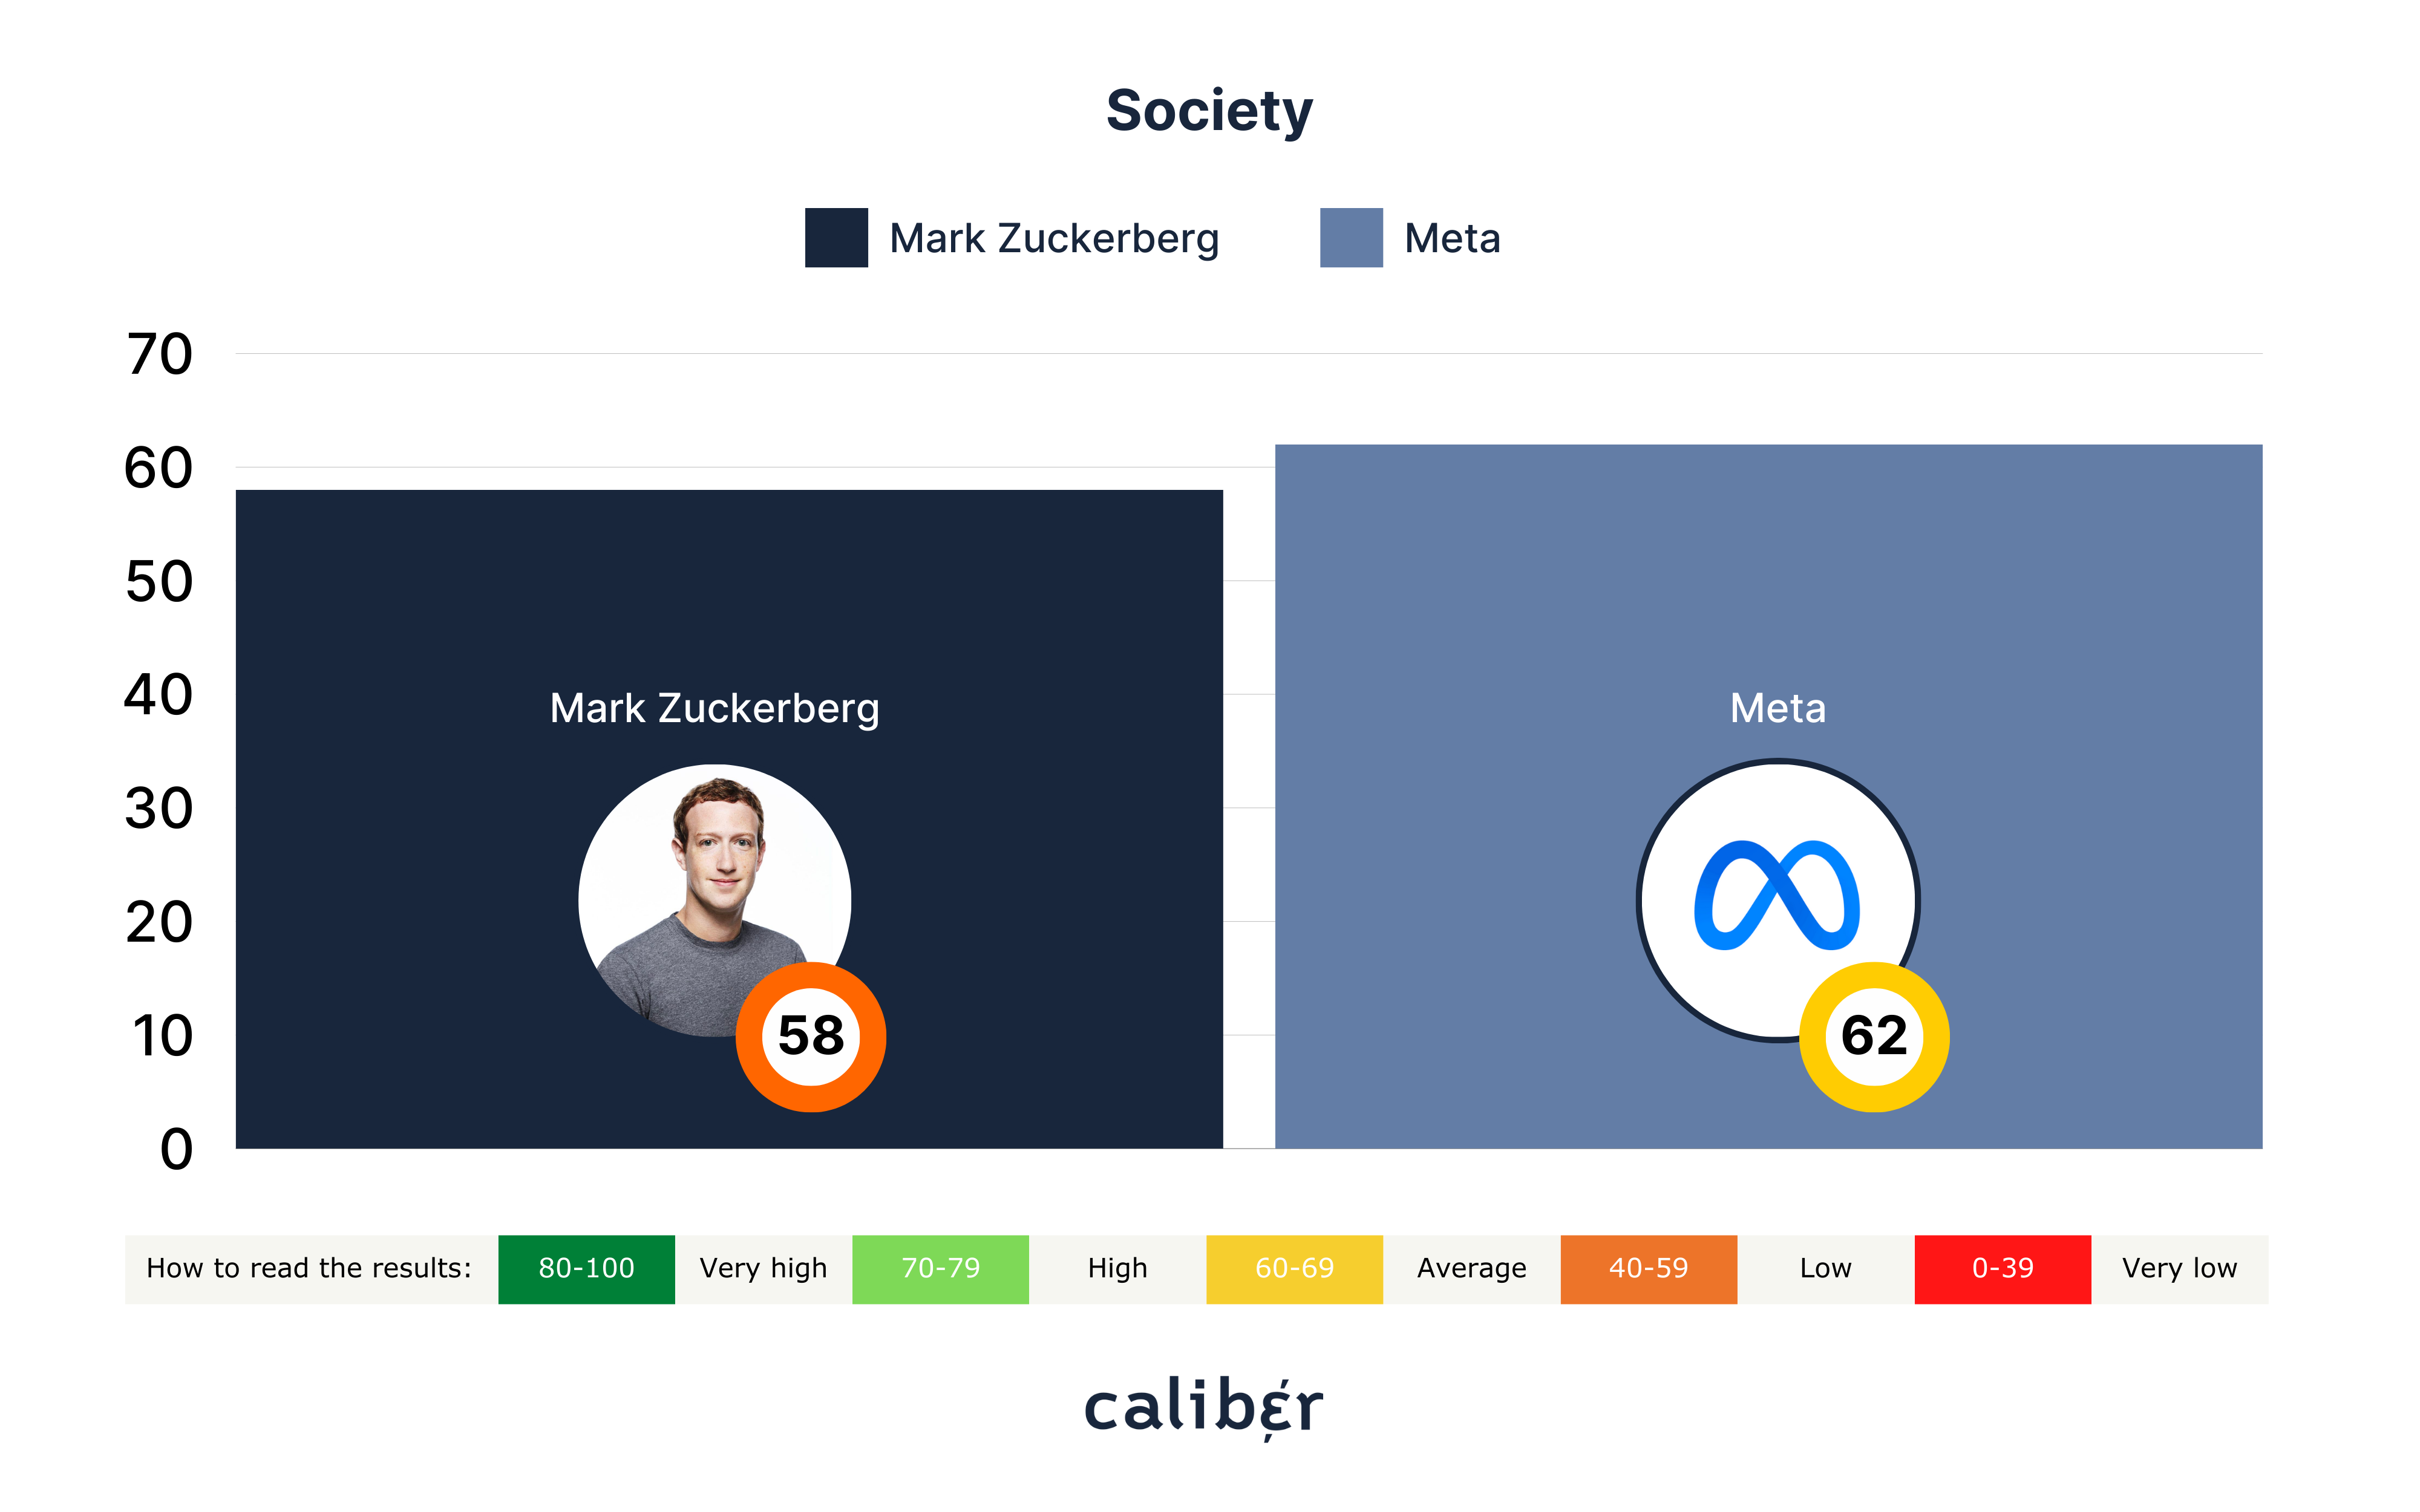 Mark Zuckerberg Society Score